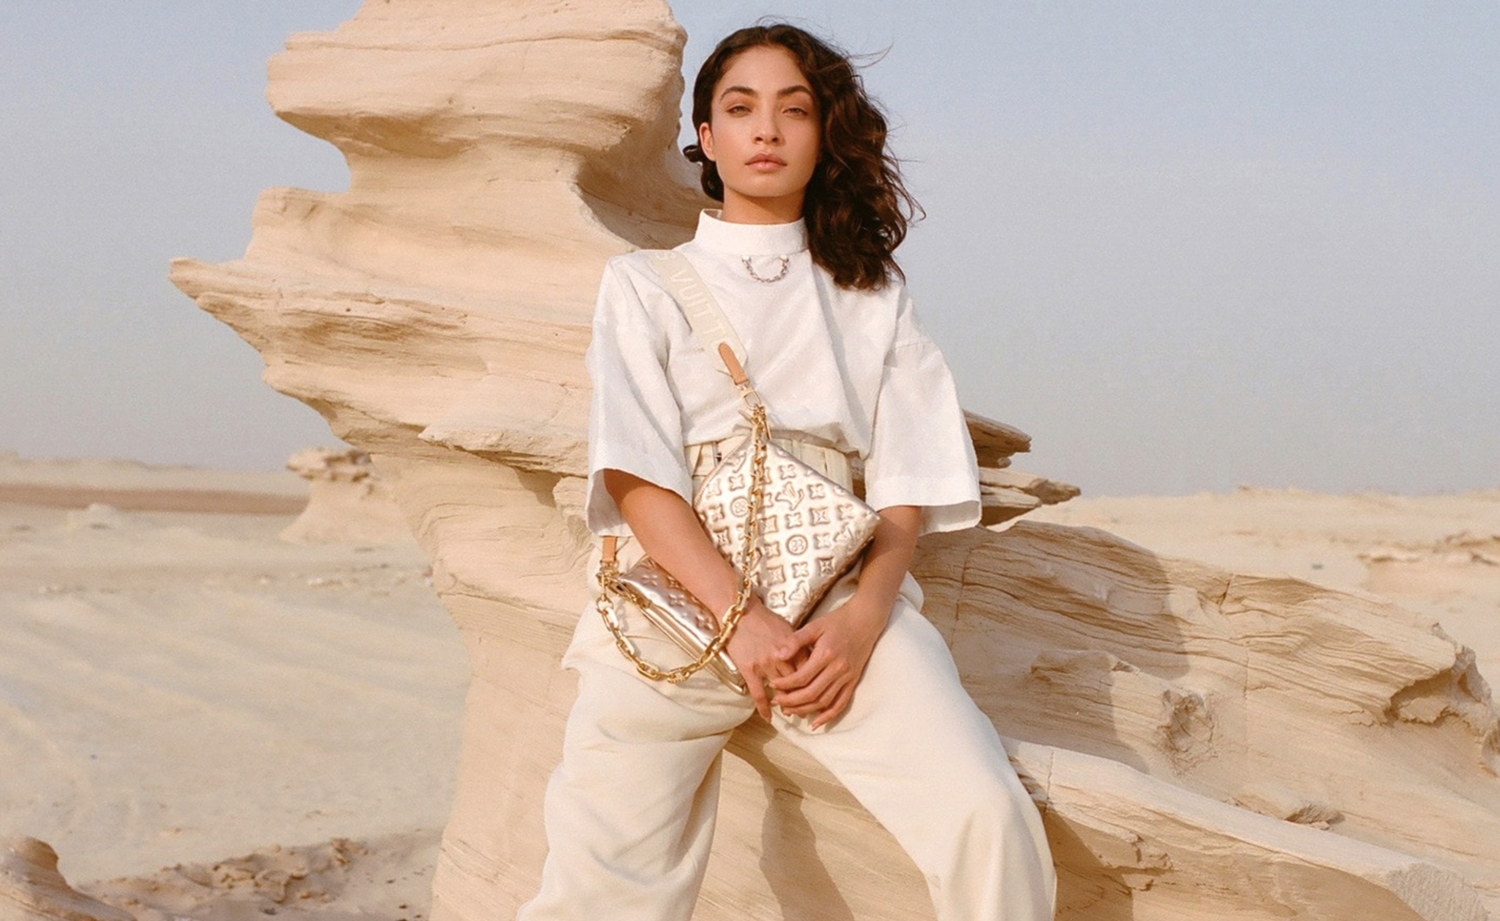 Fashion Campaigns Featuring Arab Talent